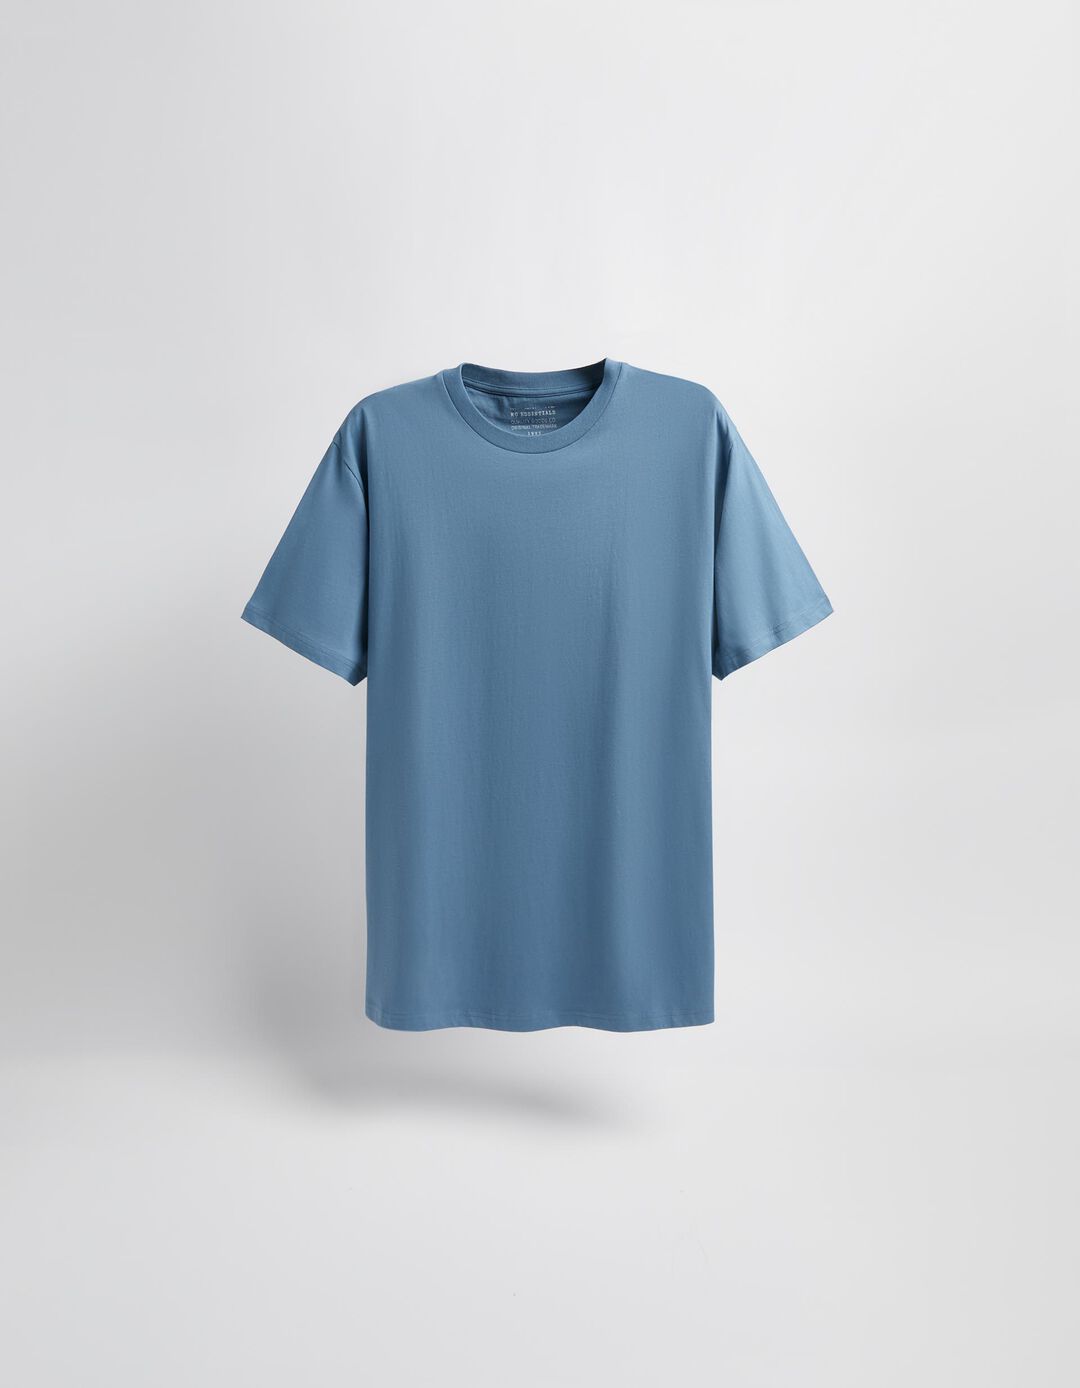 T-shirt Decote Redondo, Homem, Azul